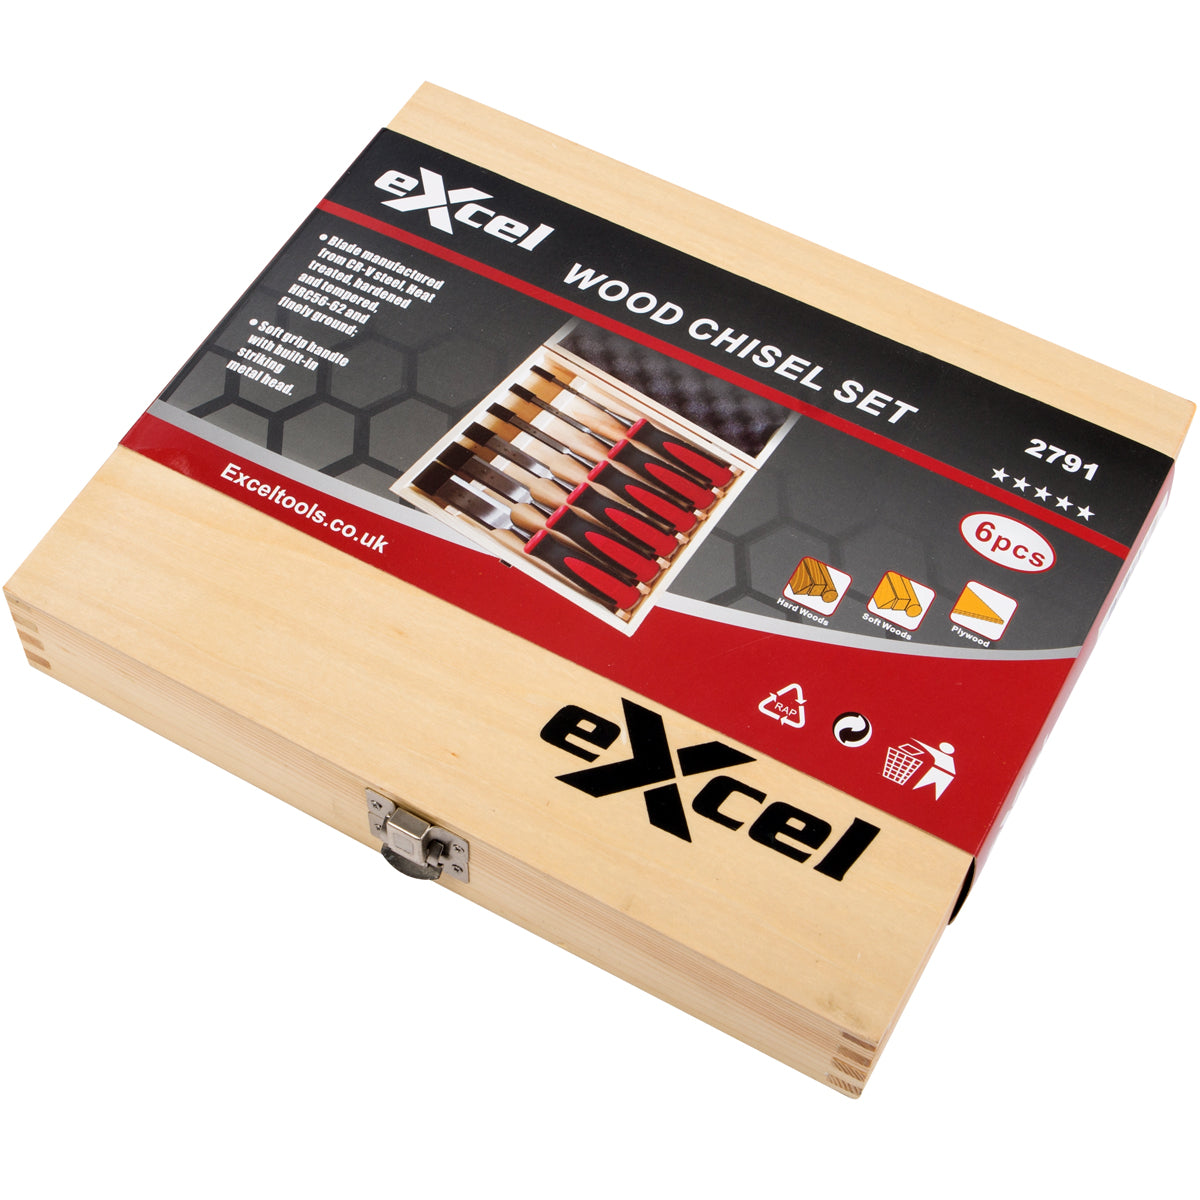 Excel Wood Chisel Bevel Edged Chrome Vanadium 6 Piece Set 6mm - 32mm